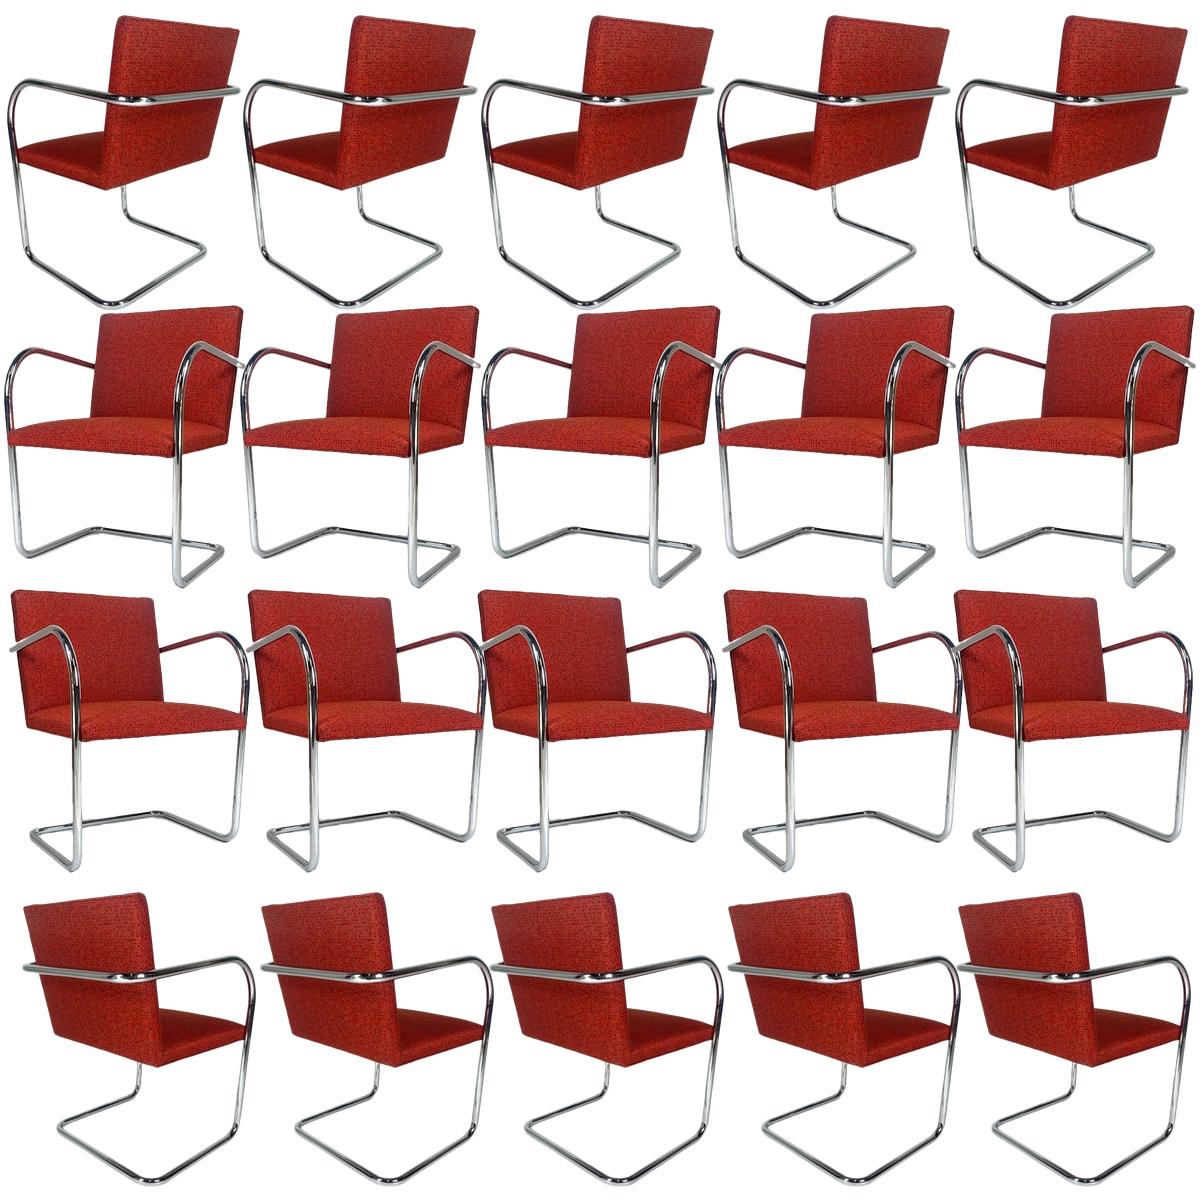 Ludwig Mies van der Rohe for Knoll Tubular Brno Chairs 12 Available